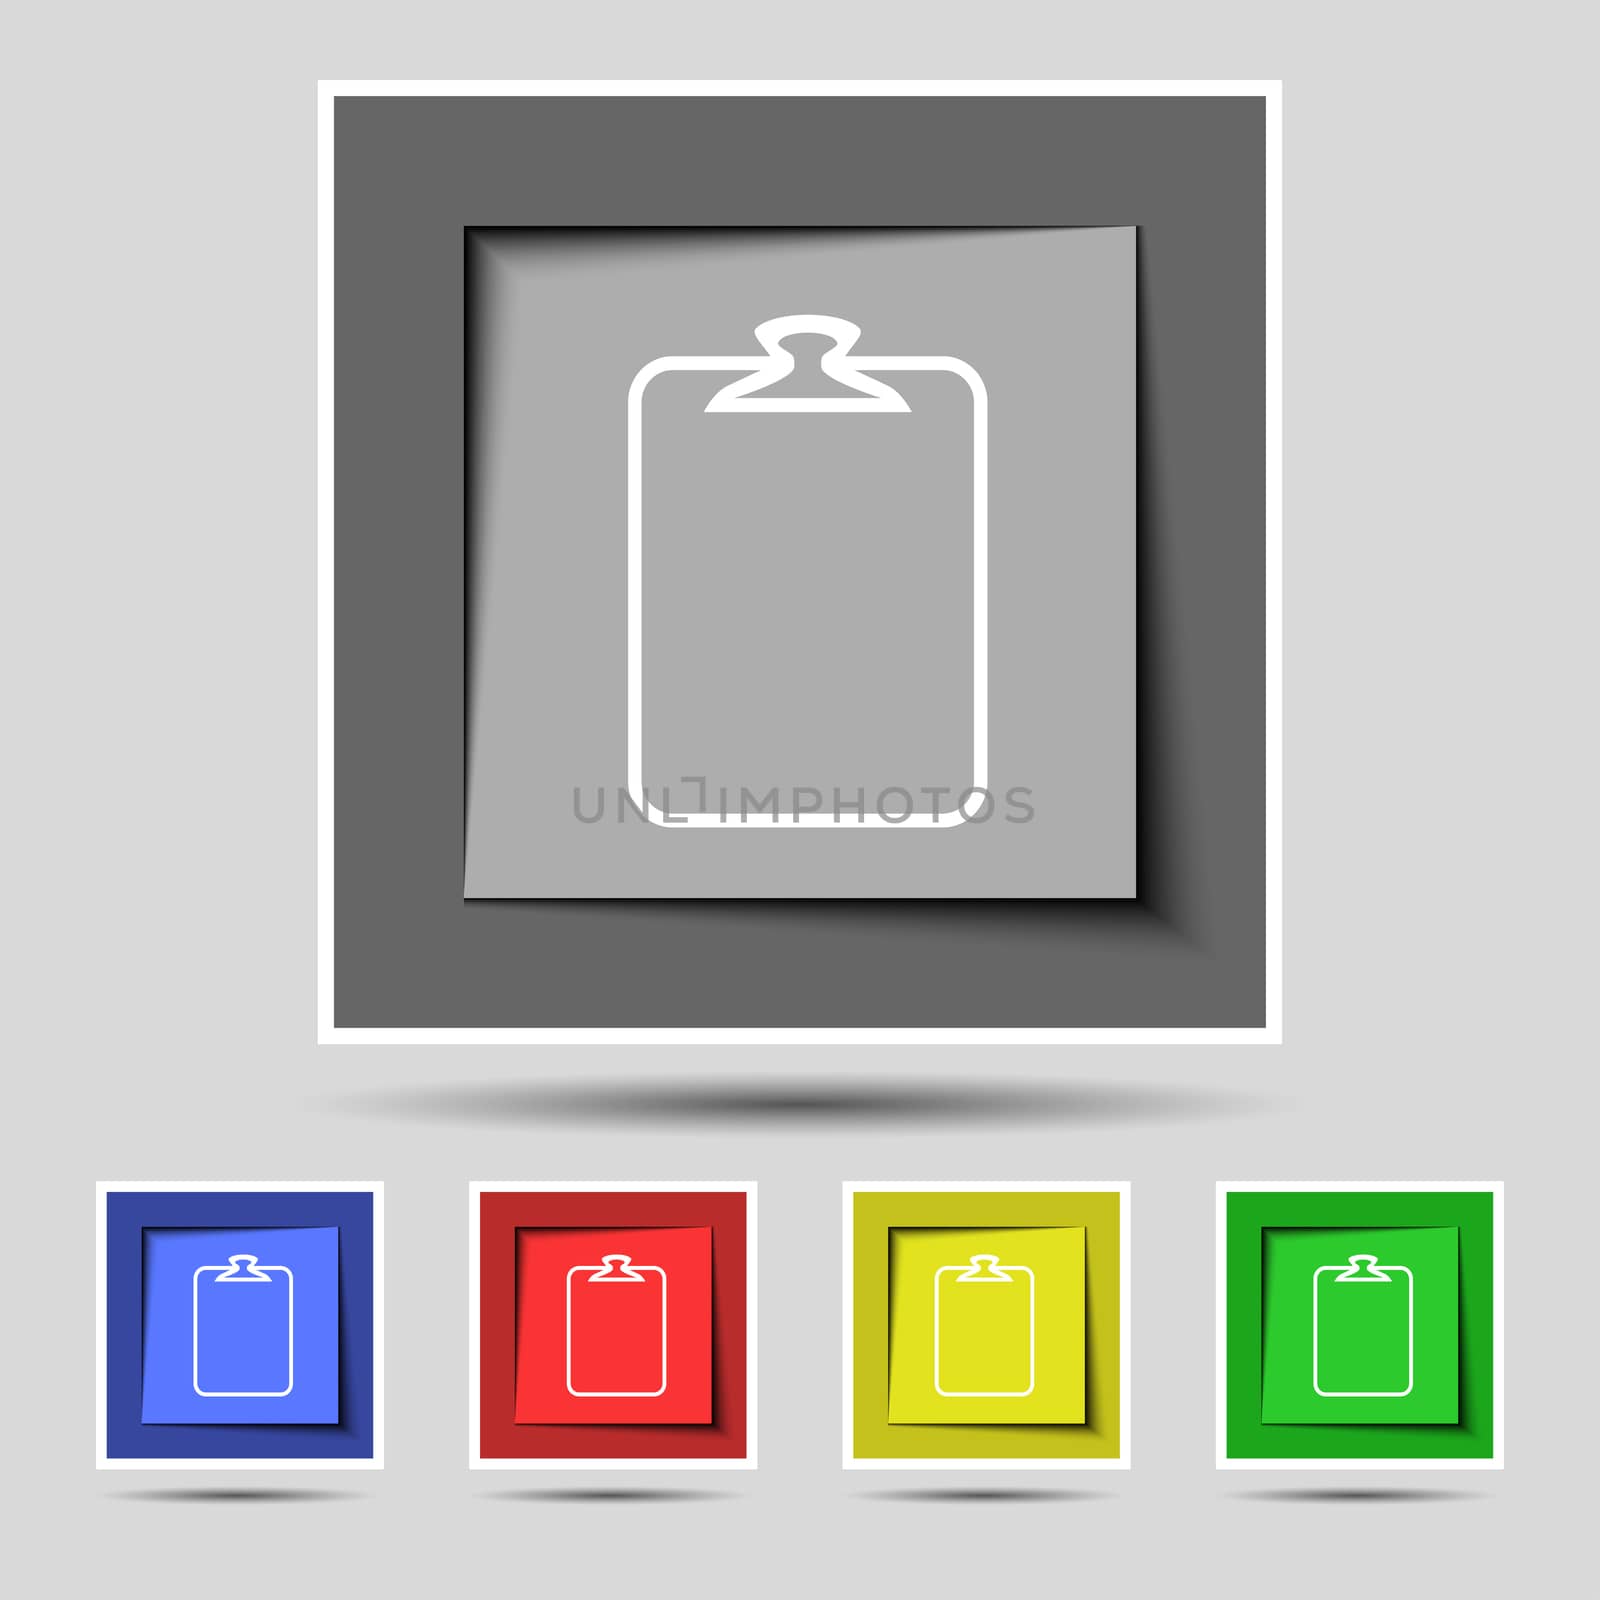 File annex icon. Paper clip symbol. Attach sign. Set of coloured buttons. illustration